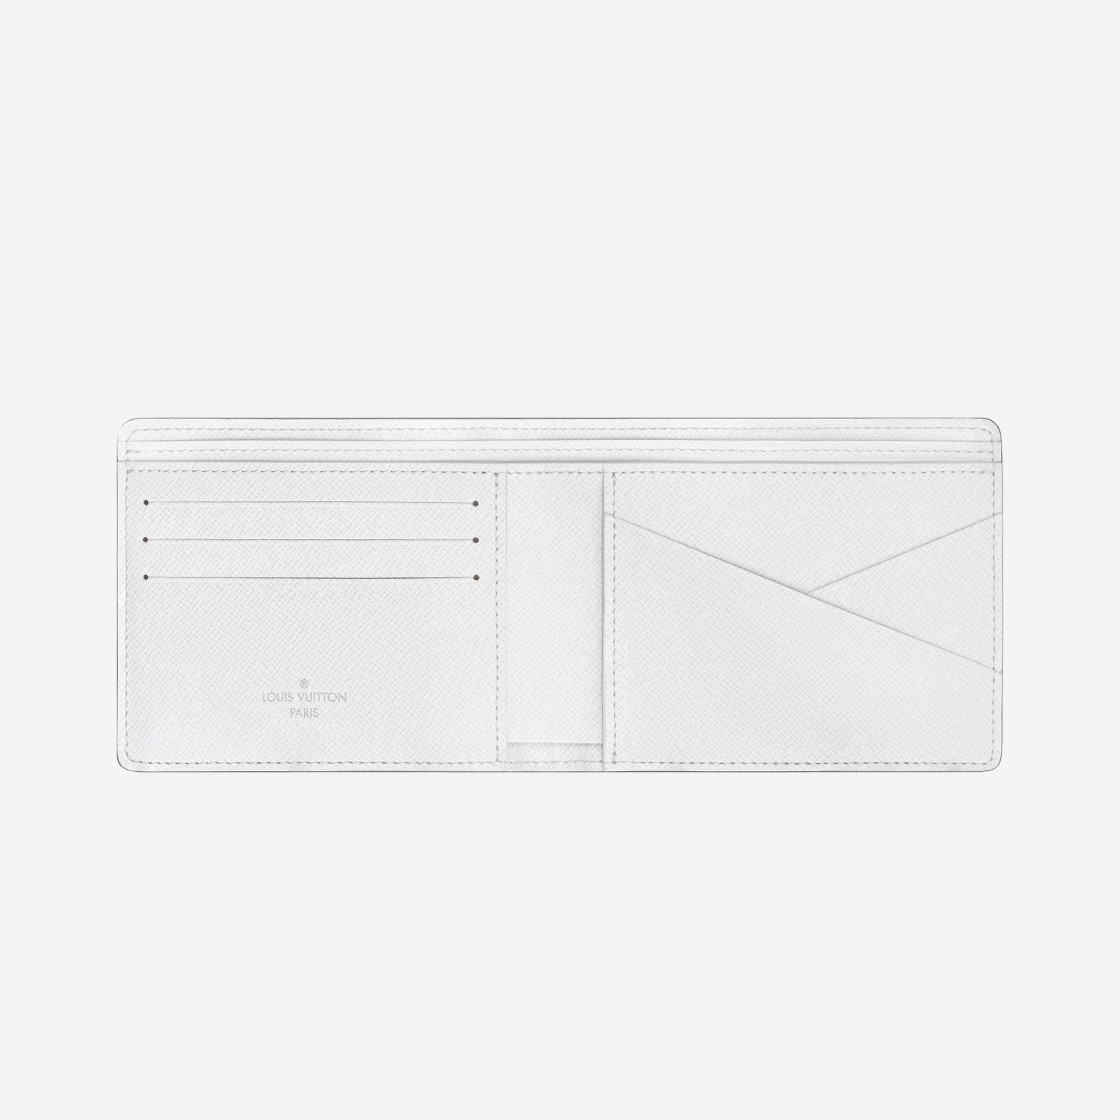 Louis Vuitton M30896 Multiple Wallet, White, One Size